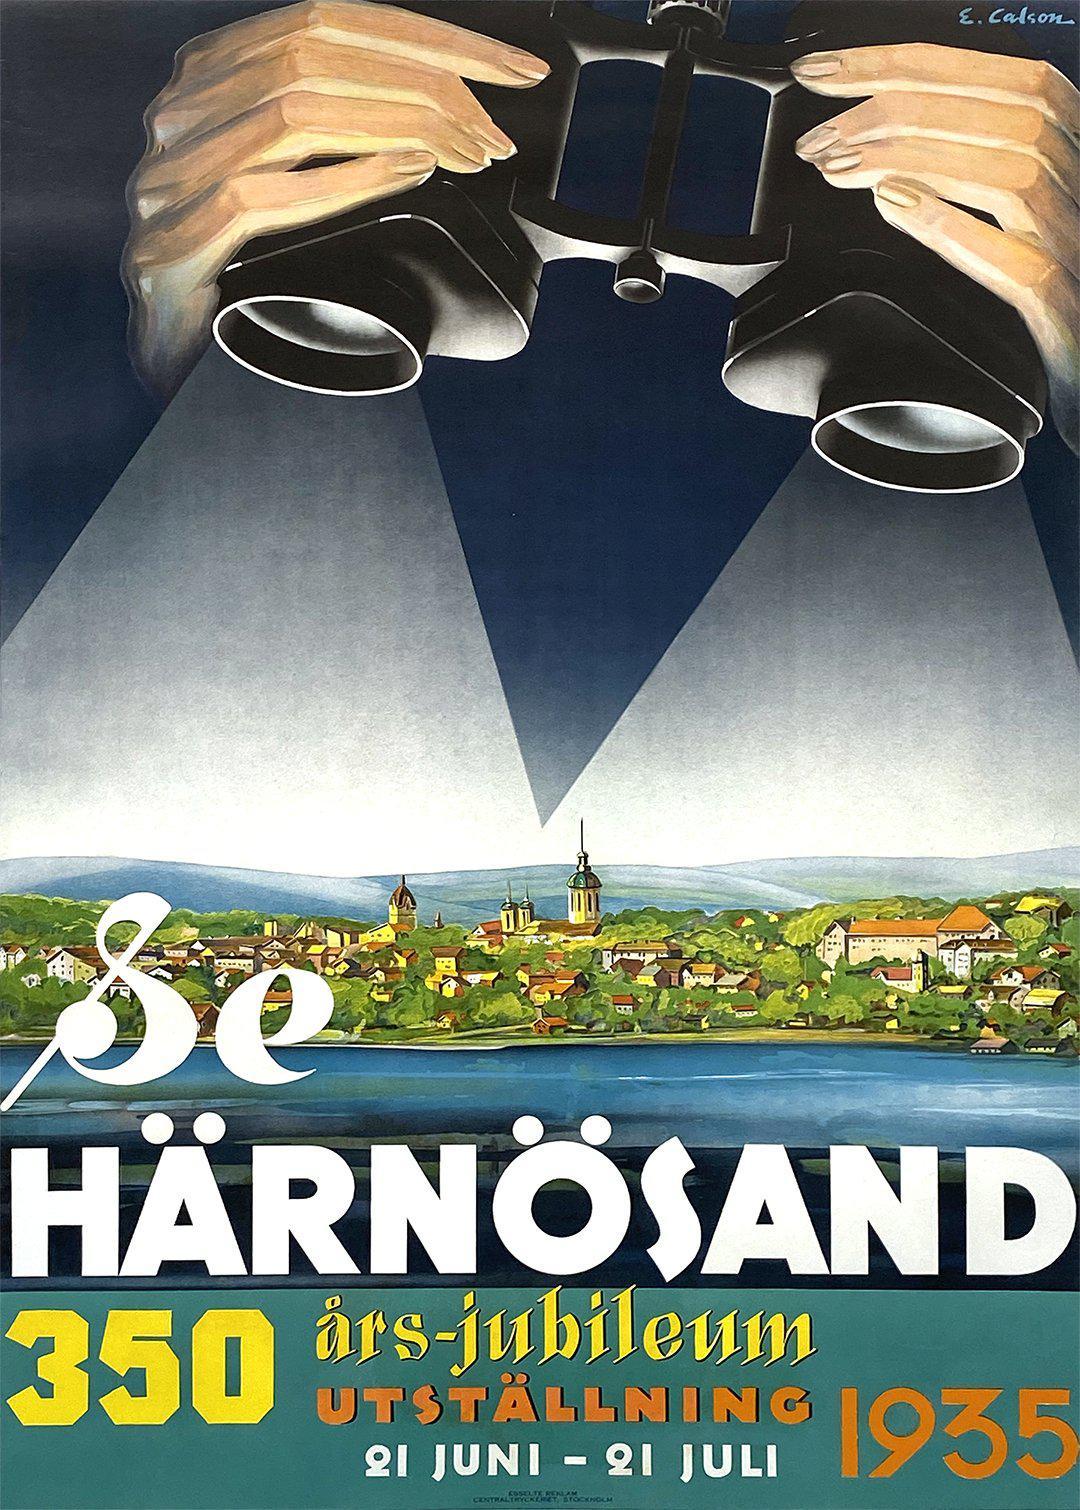 Original Vintage Swedish Travel Poster Harnosand by E Calson 1935 Swedish